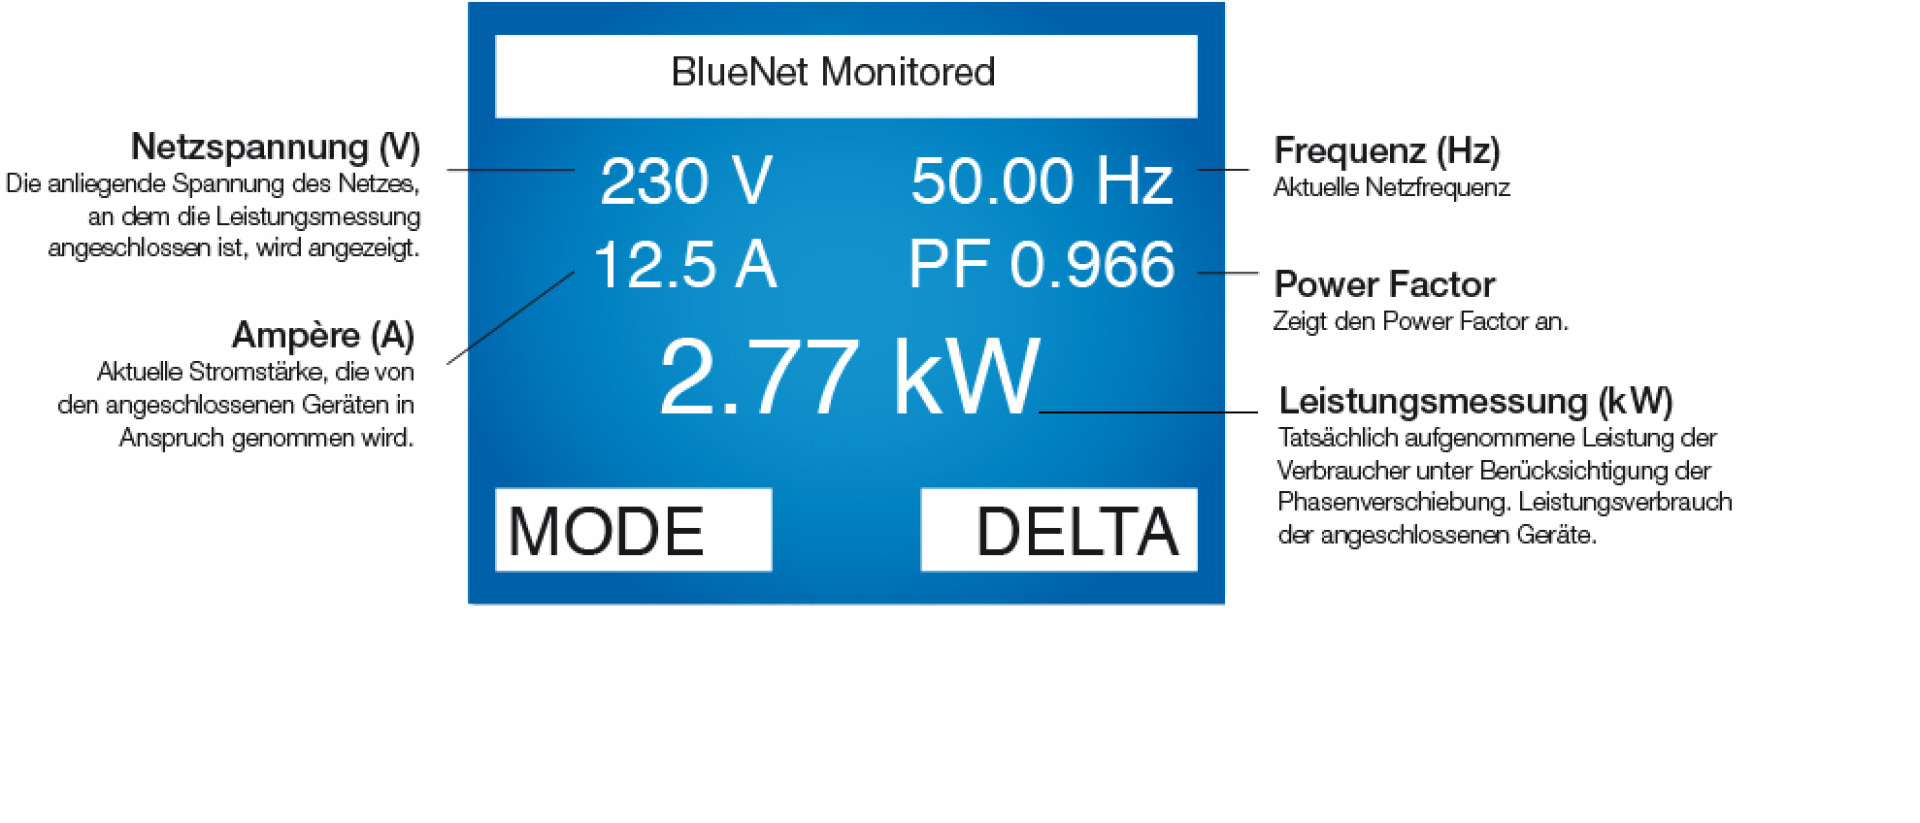 PDU Vertikal BN2000 Monitored 36 x C13 + 6 x C19, 3-Phase